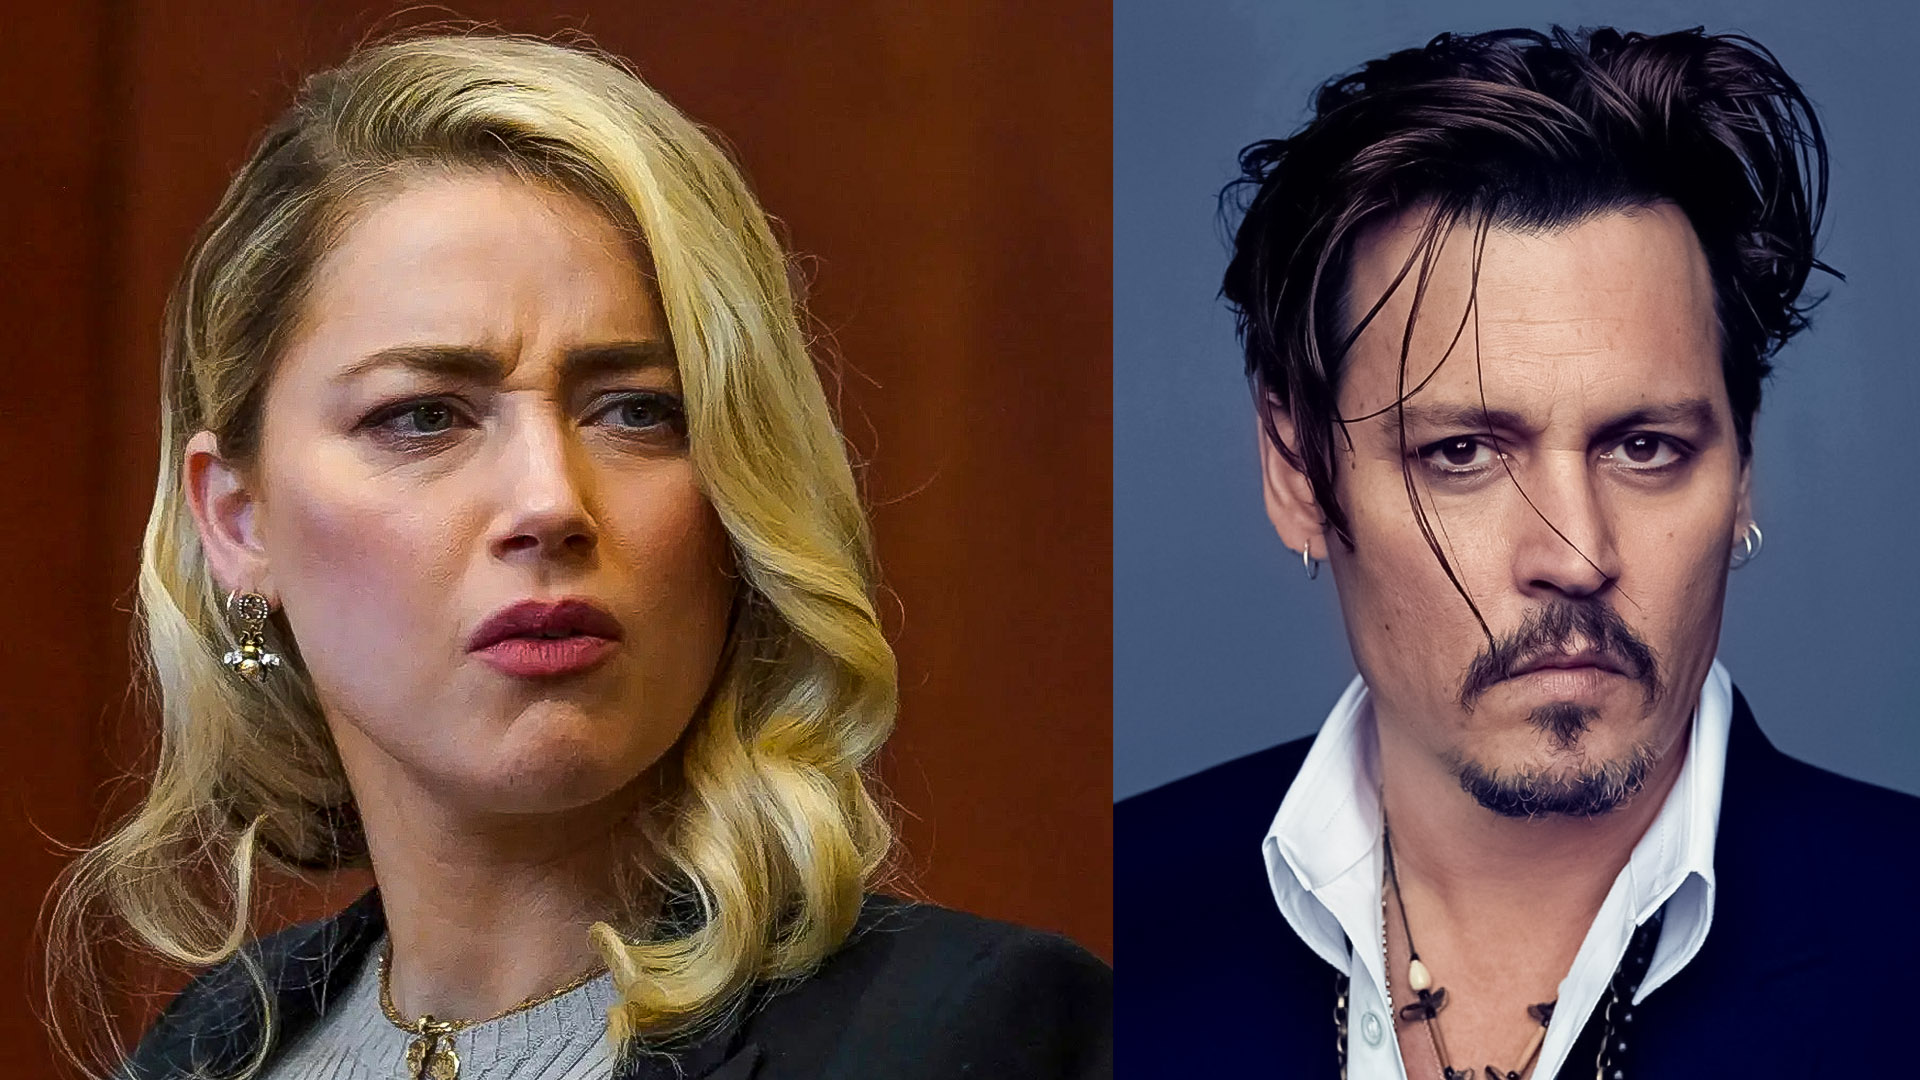 Johnny Depp wins $15 million in defamation case against Amber Heard